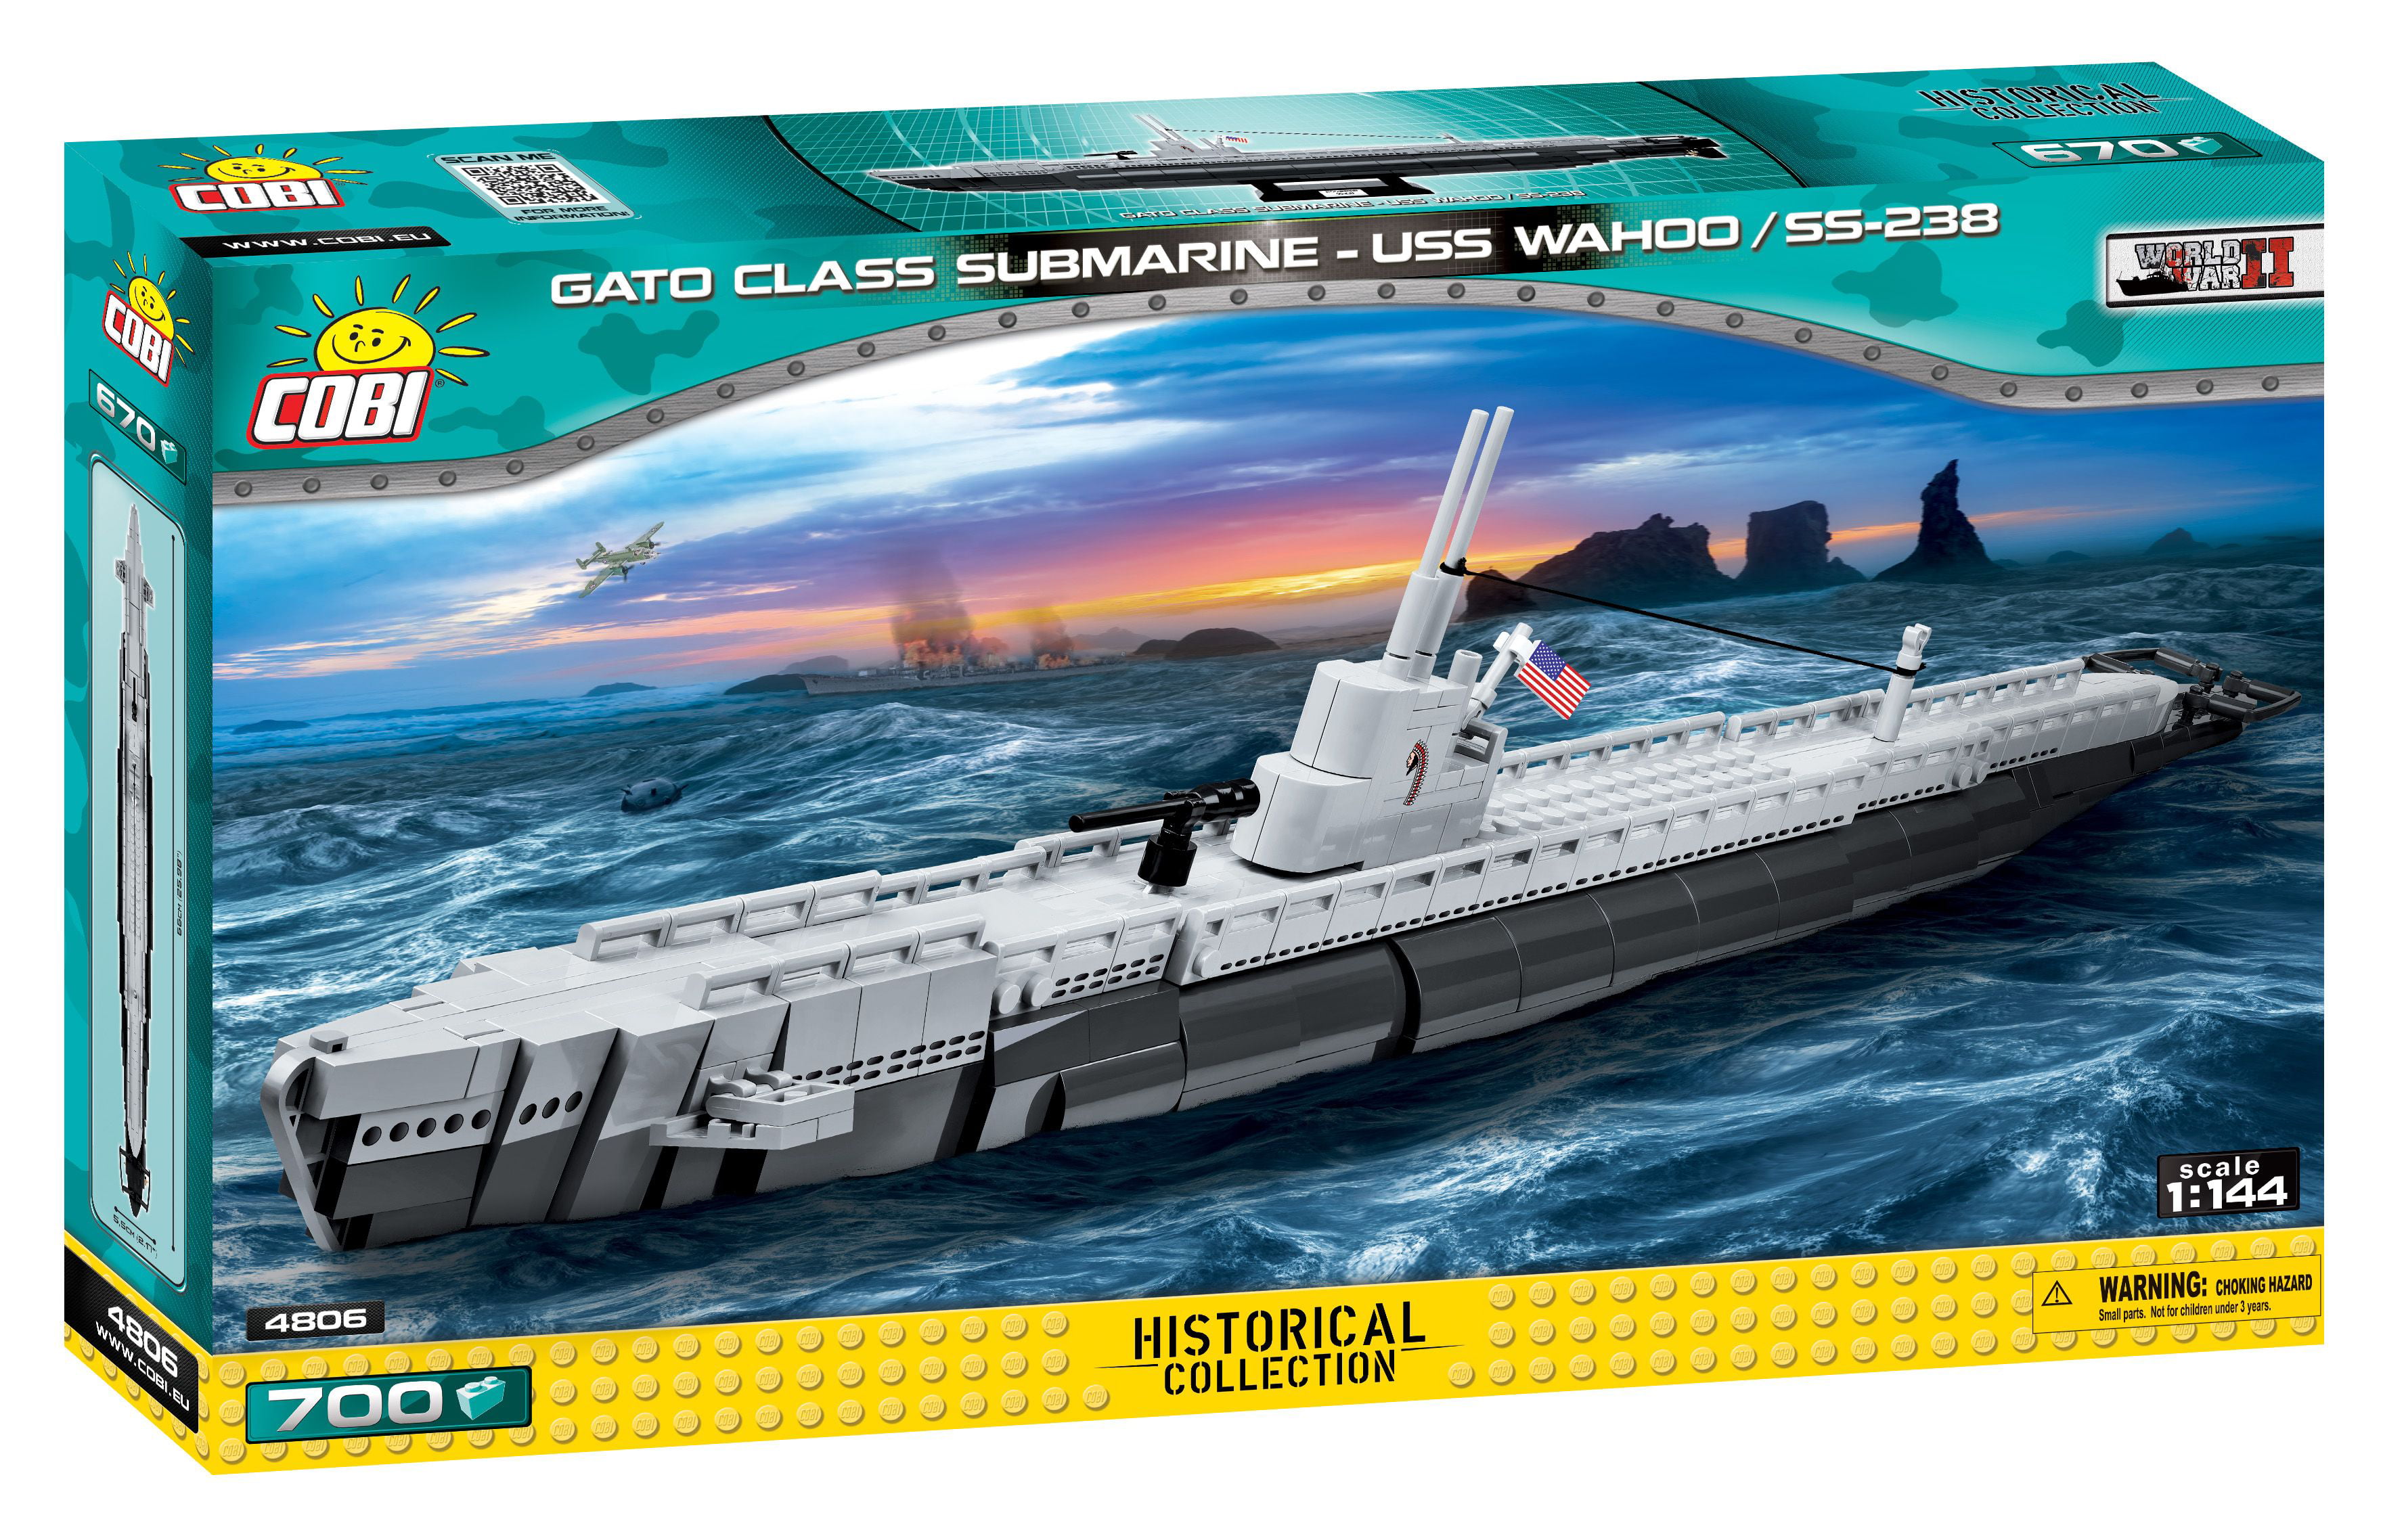 COBI ® KIT 4806-Gato Class Submarine-USS Wahoo/ss-238 NUOVO in scatola originale/MISB 